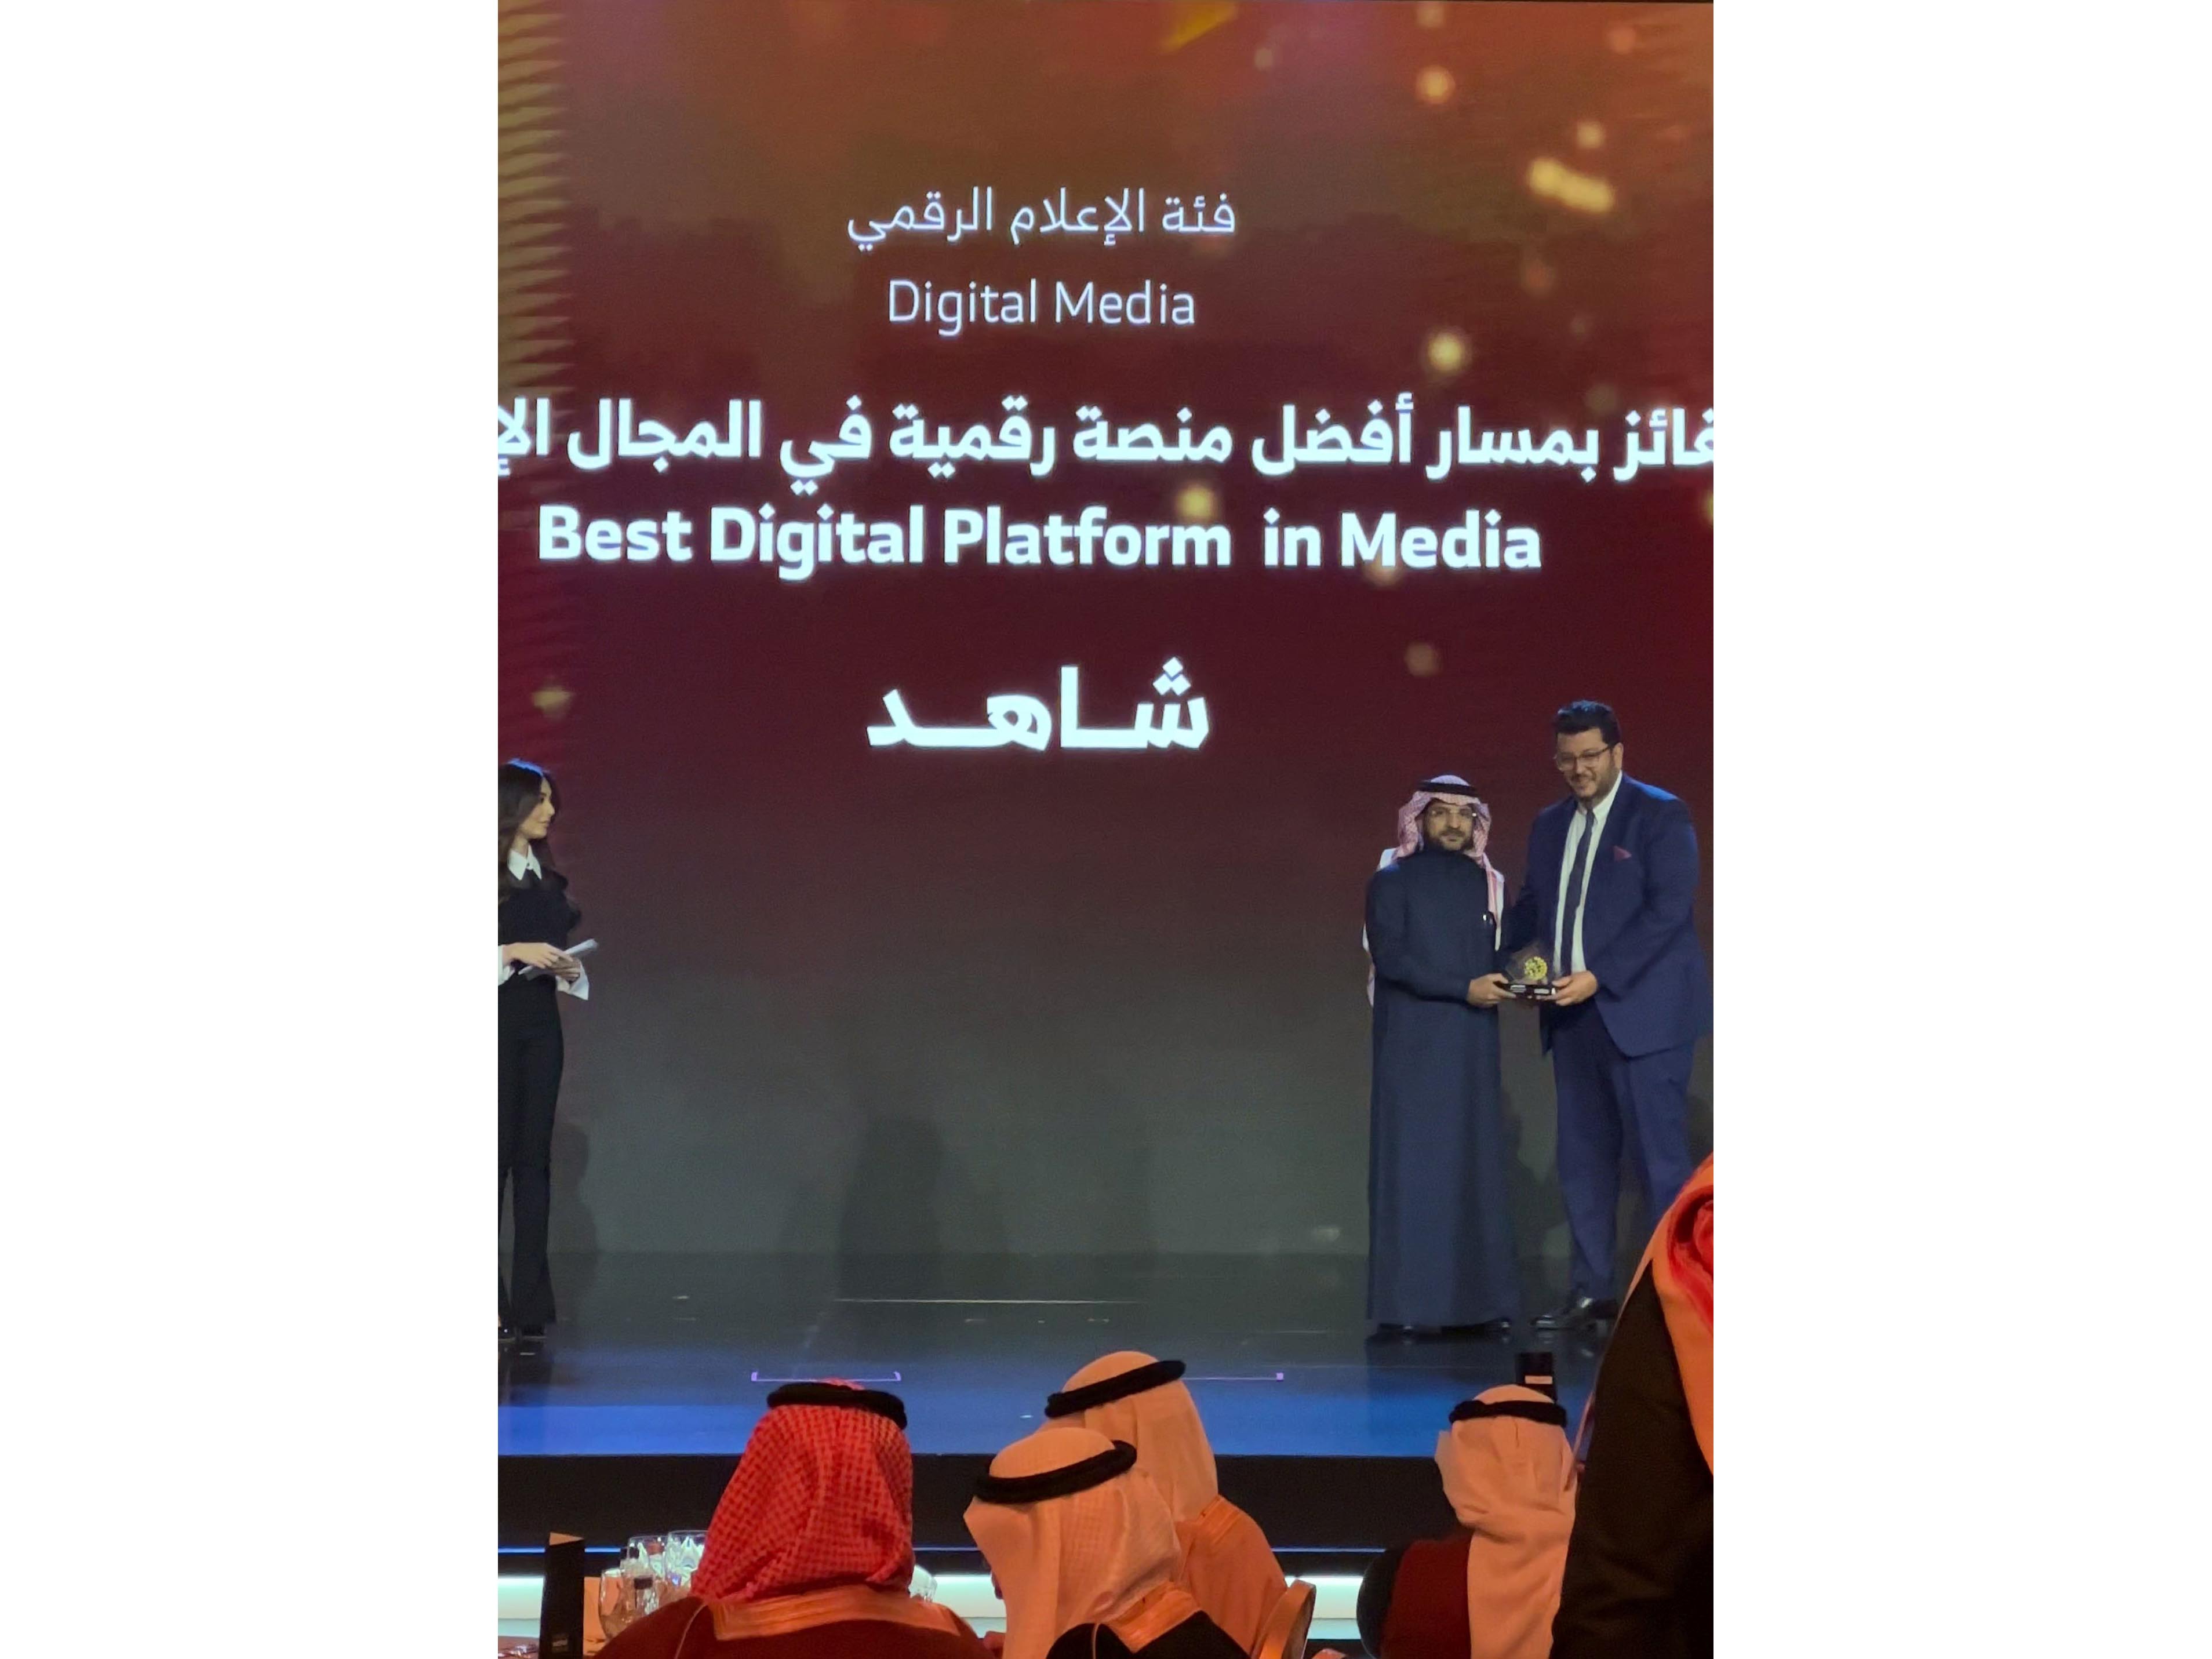 Shahid awarded 'Best Digital Platform in Media' by Saudi Media Forum 3